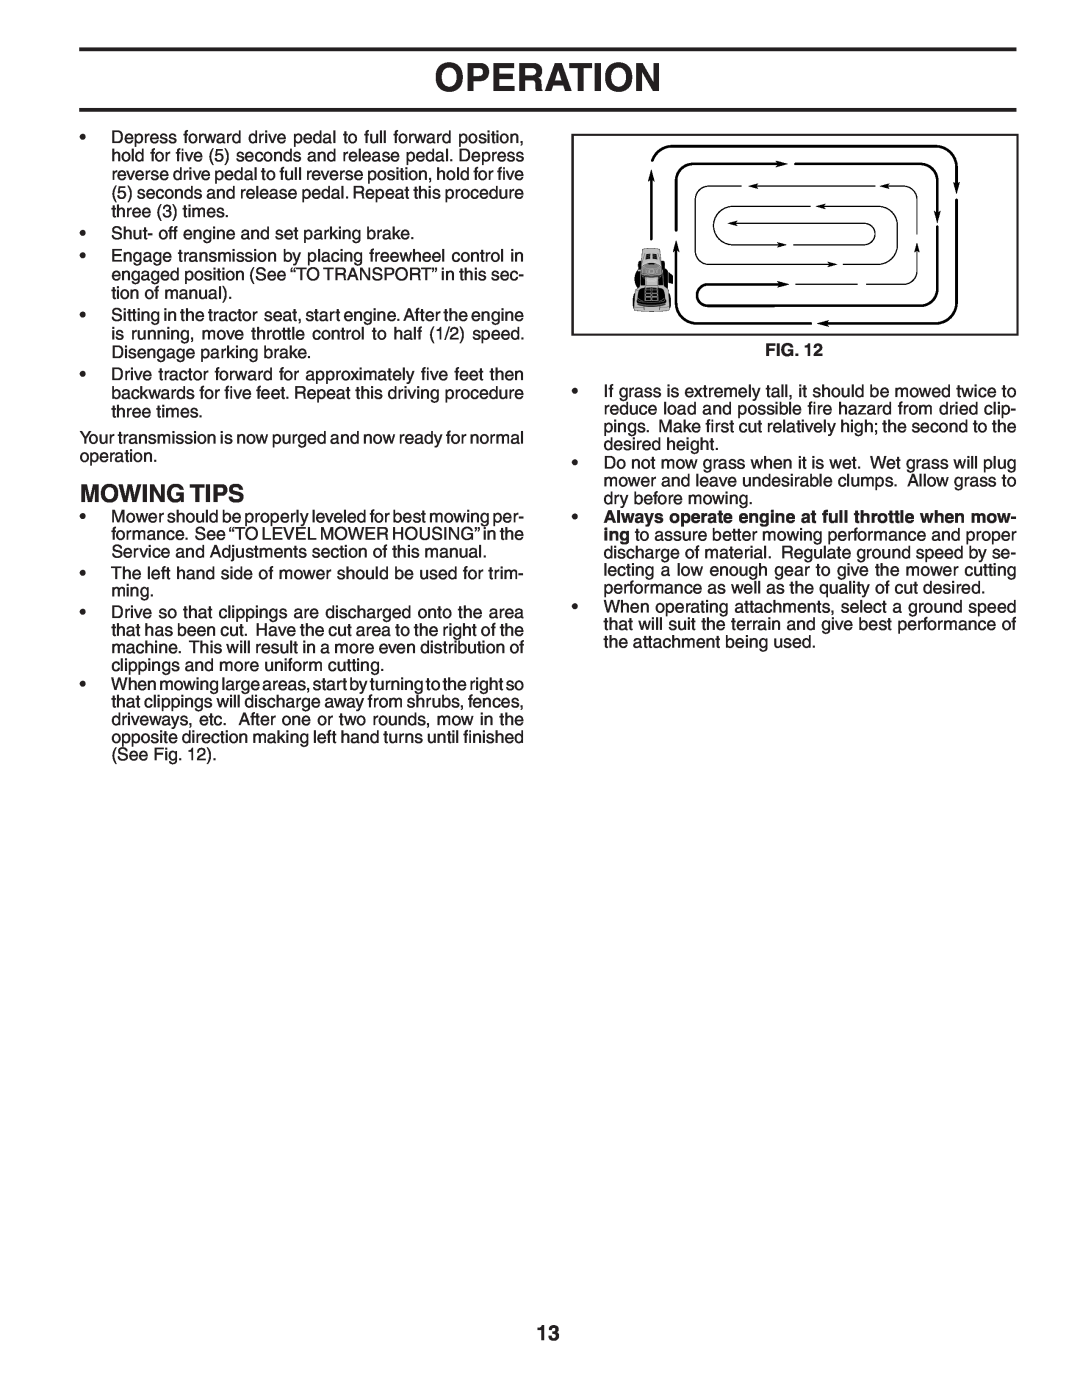 Poulan 403808 manual Mowing Tips, Operation 